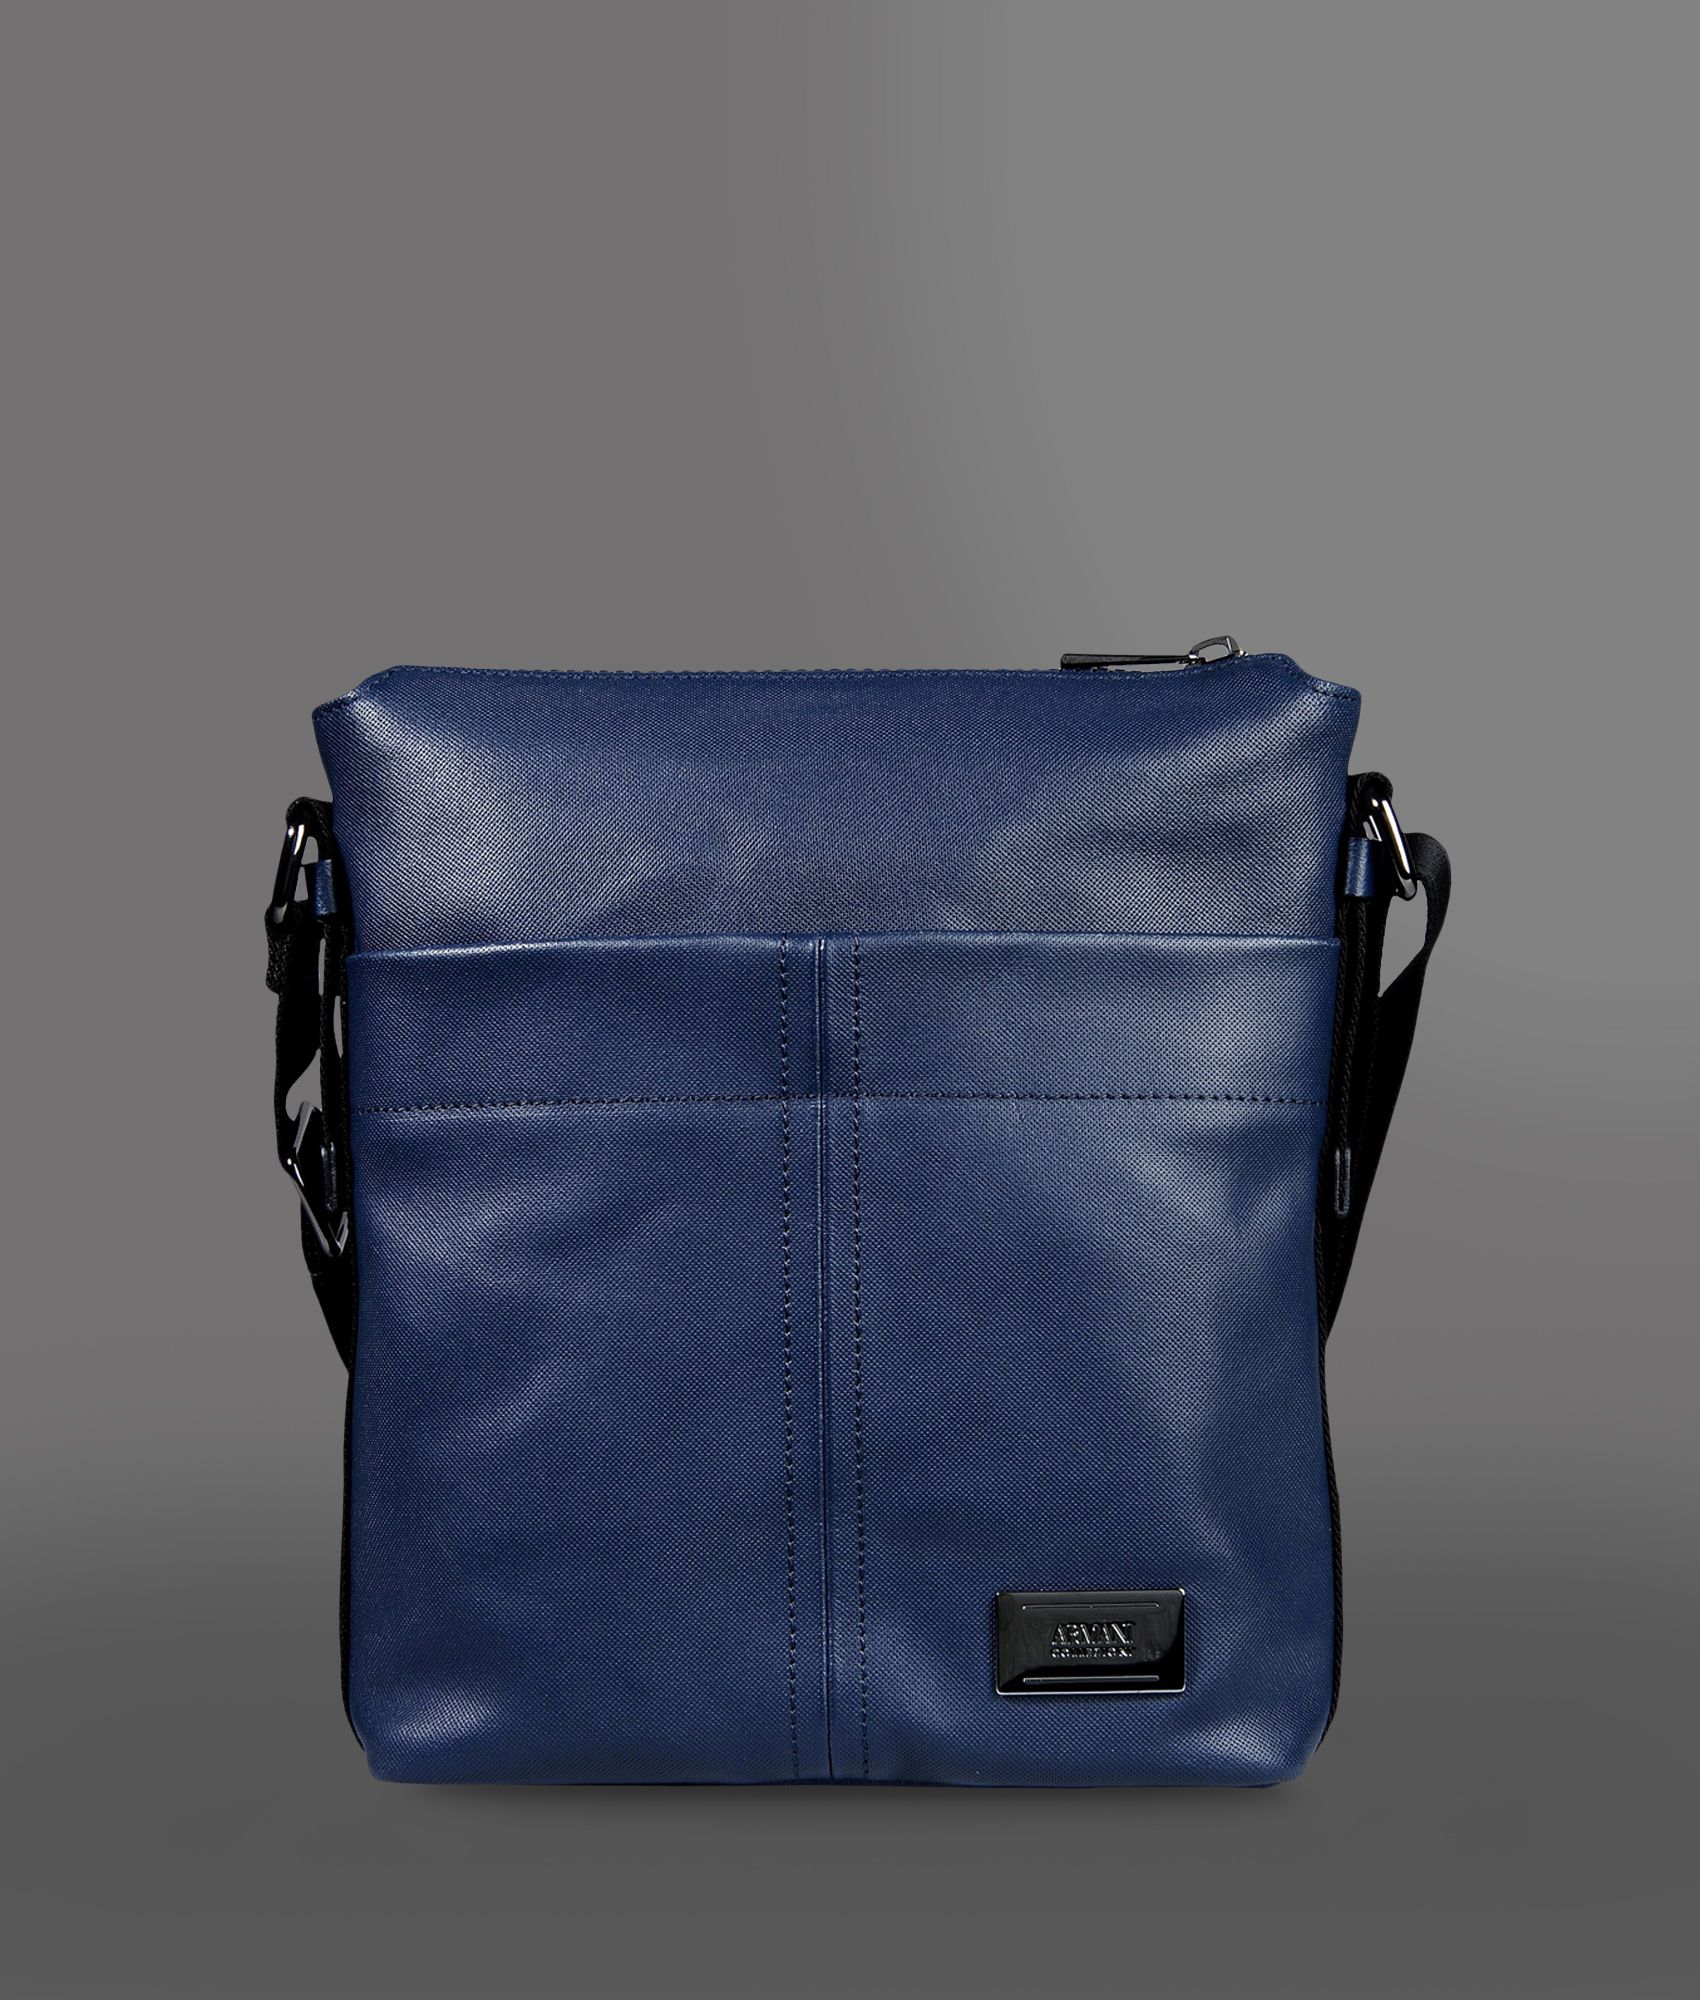 blue armani man bag